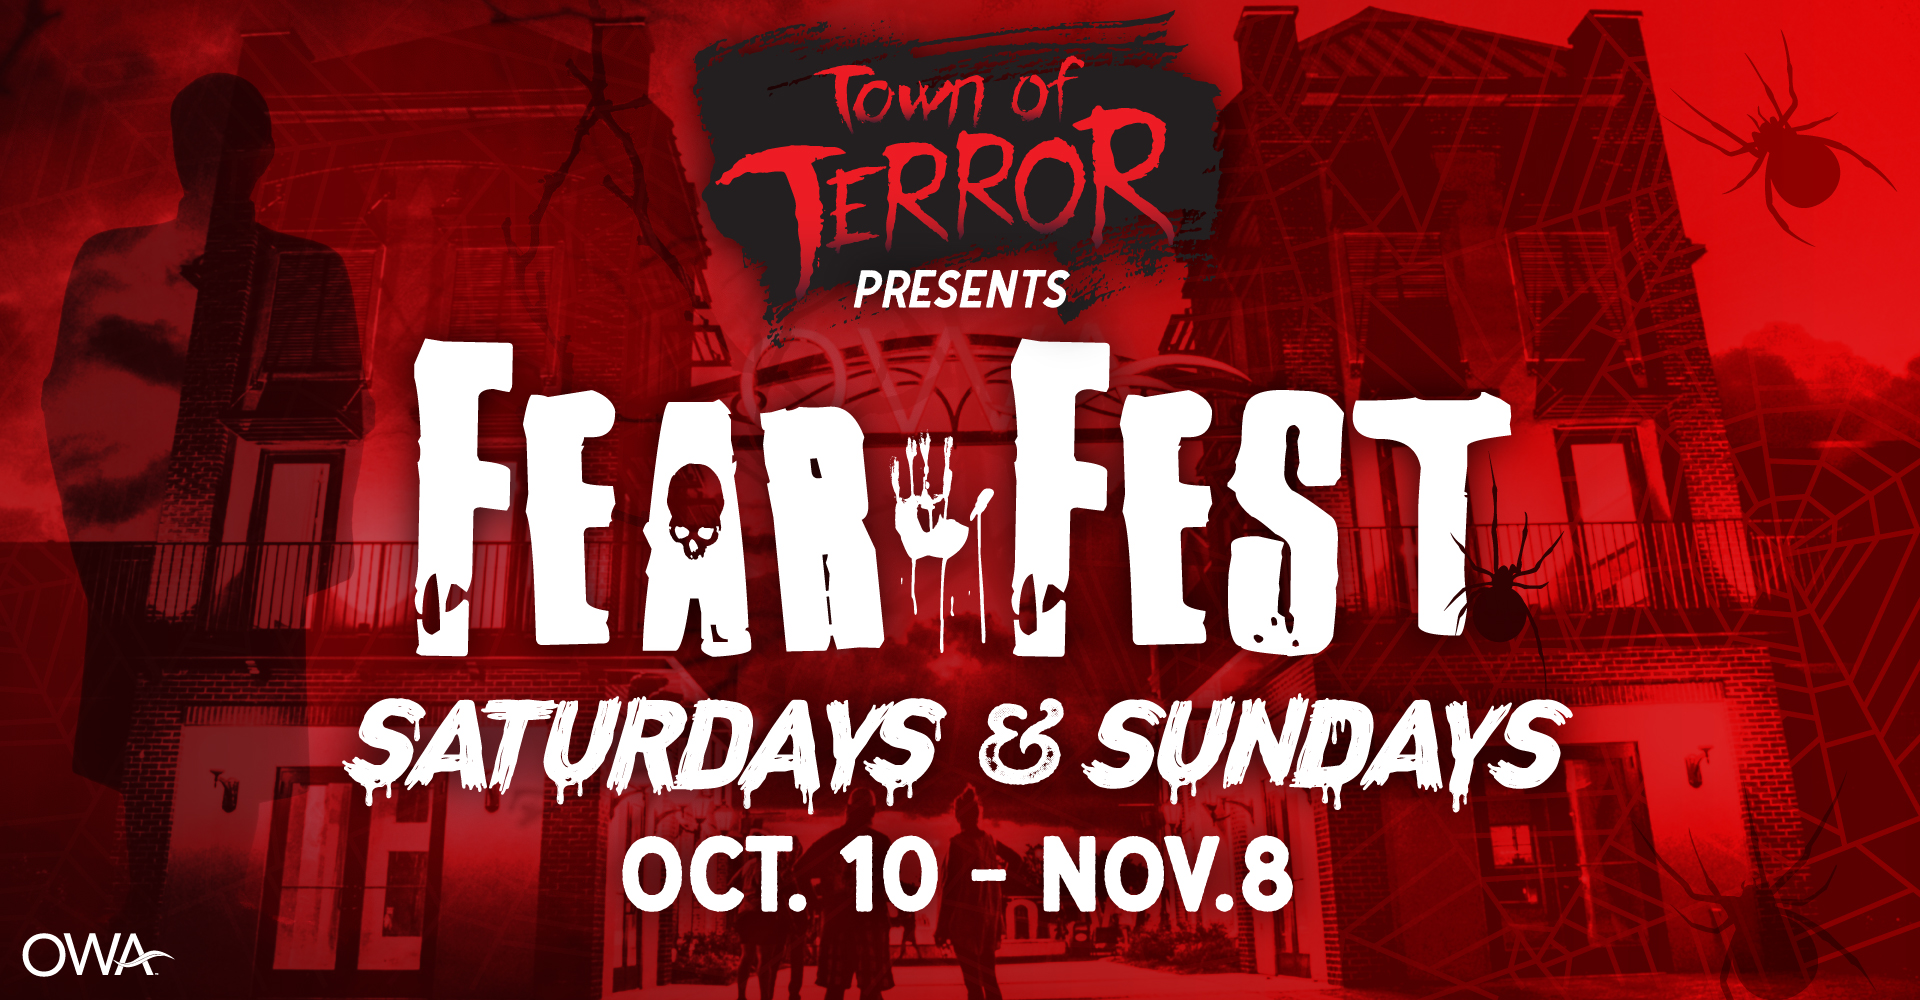 Town of Terror presents FEAR FEST Foley Alabama.Travel